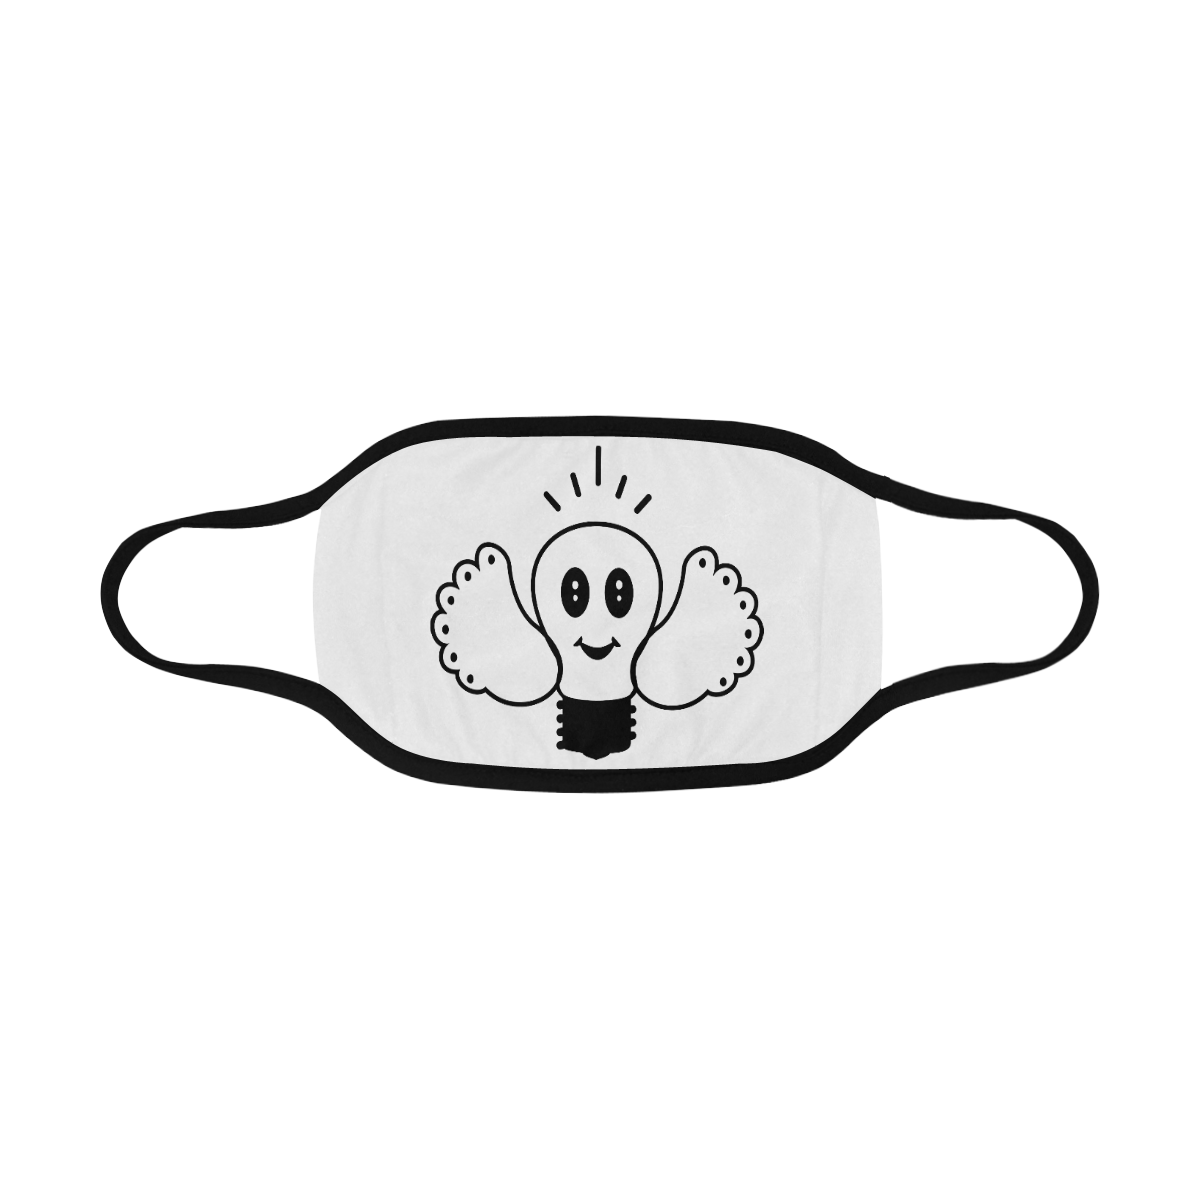 Big idea lightbulb black and white Mouth Mask